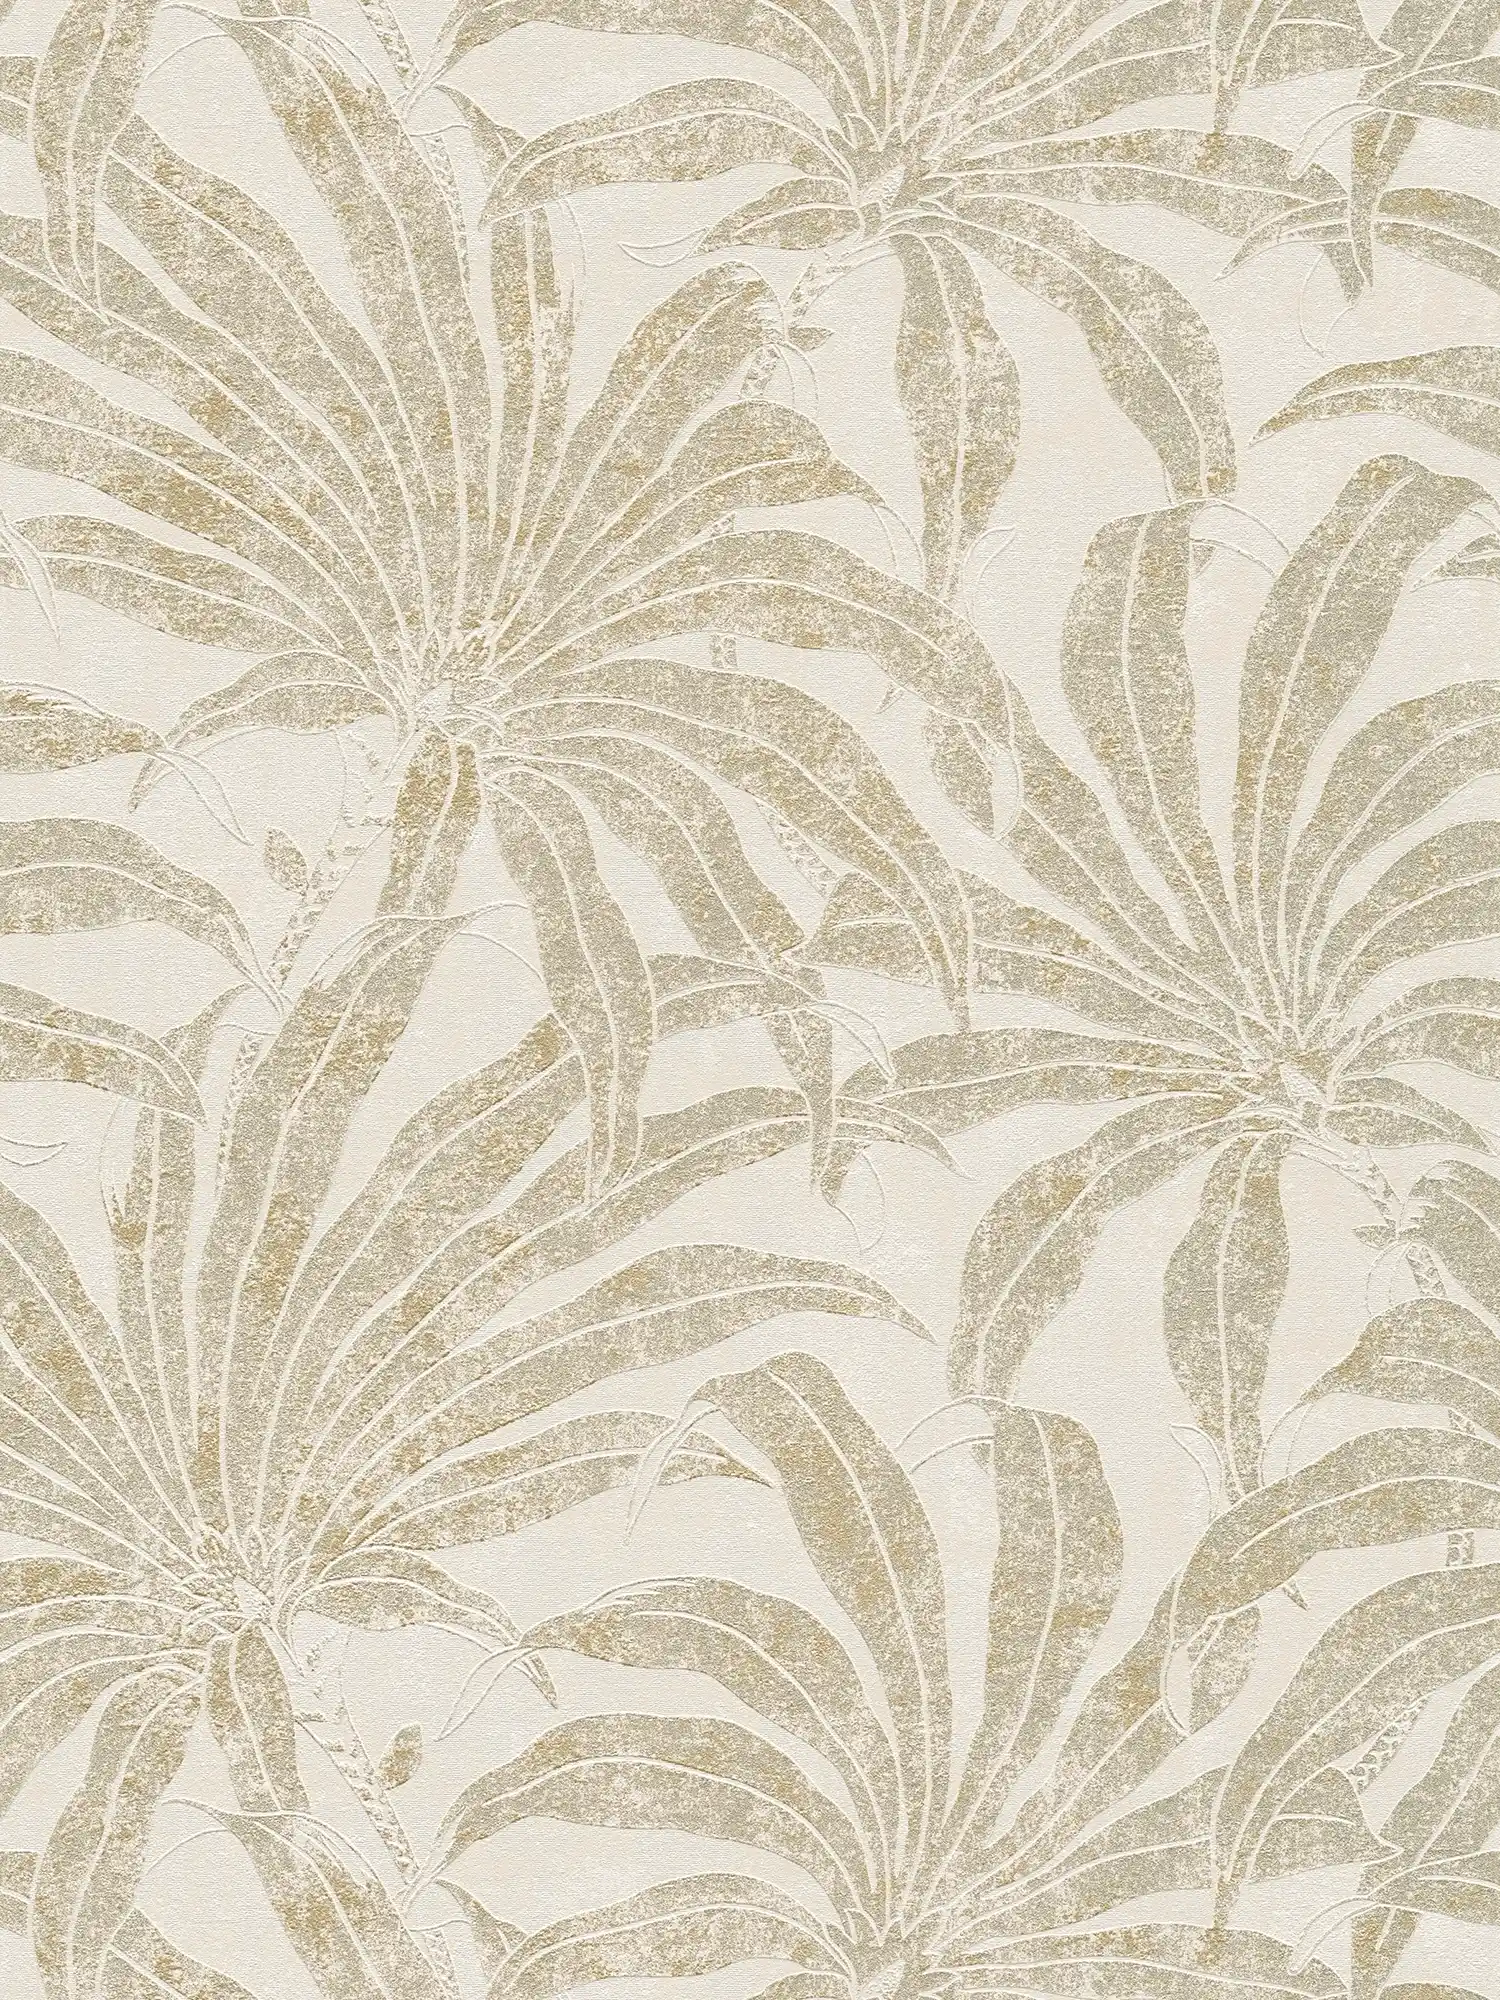 Patterned jungle flower wallpaper - beige, gold, silver
